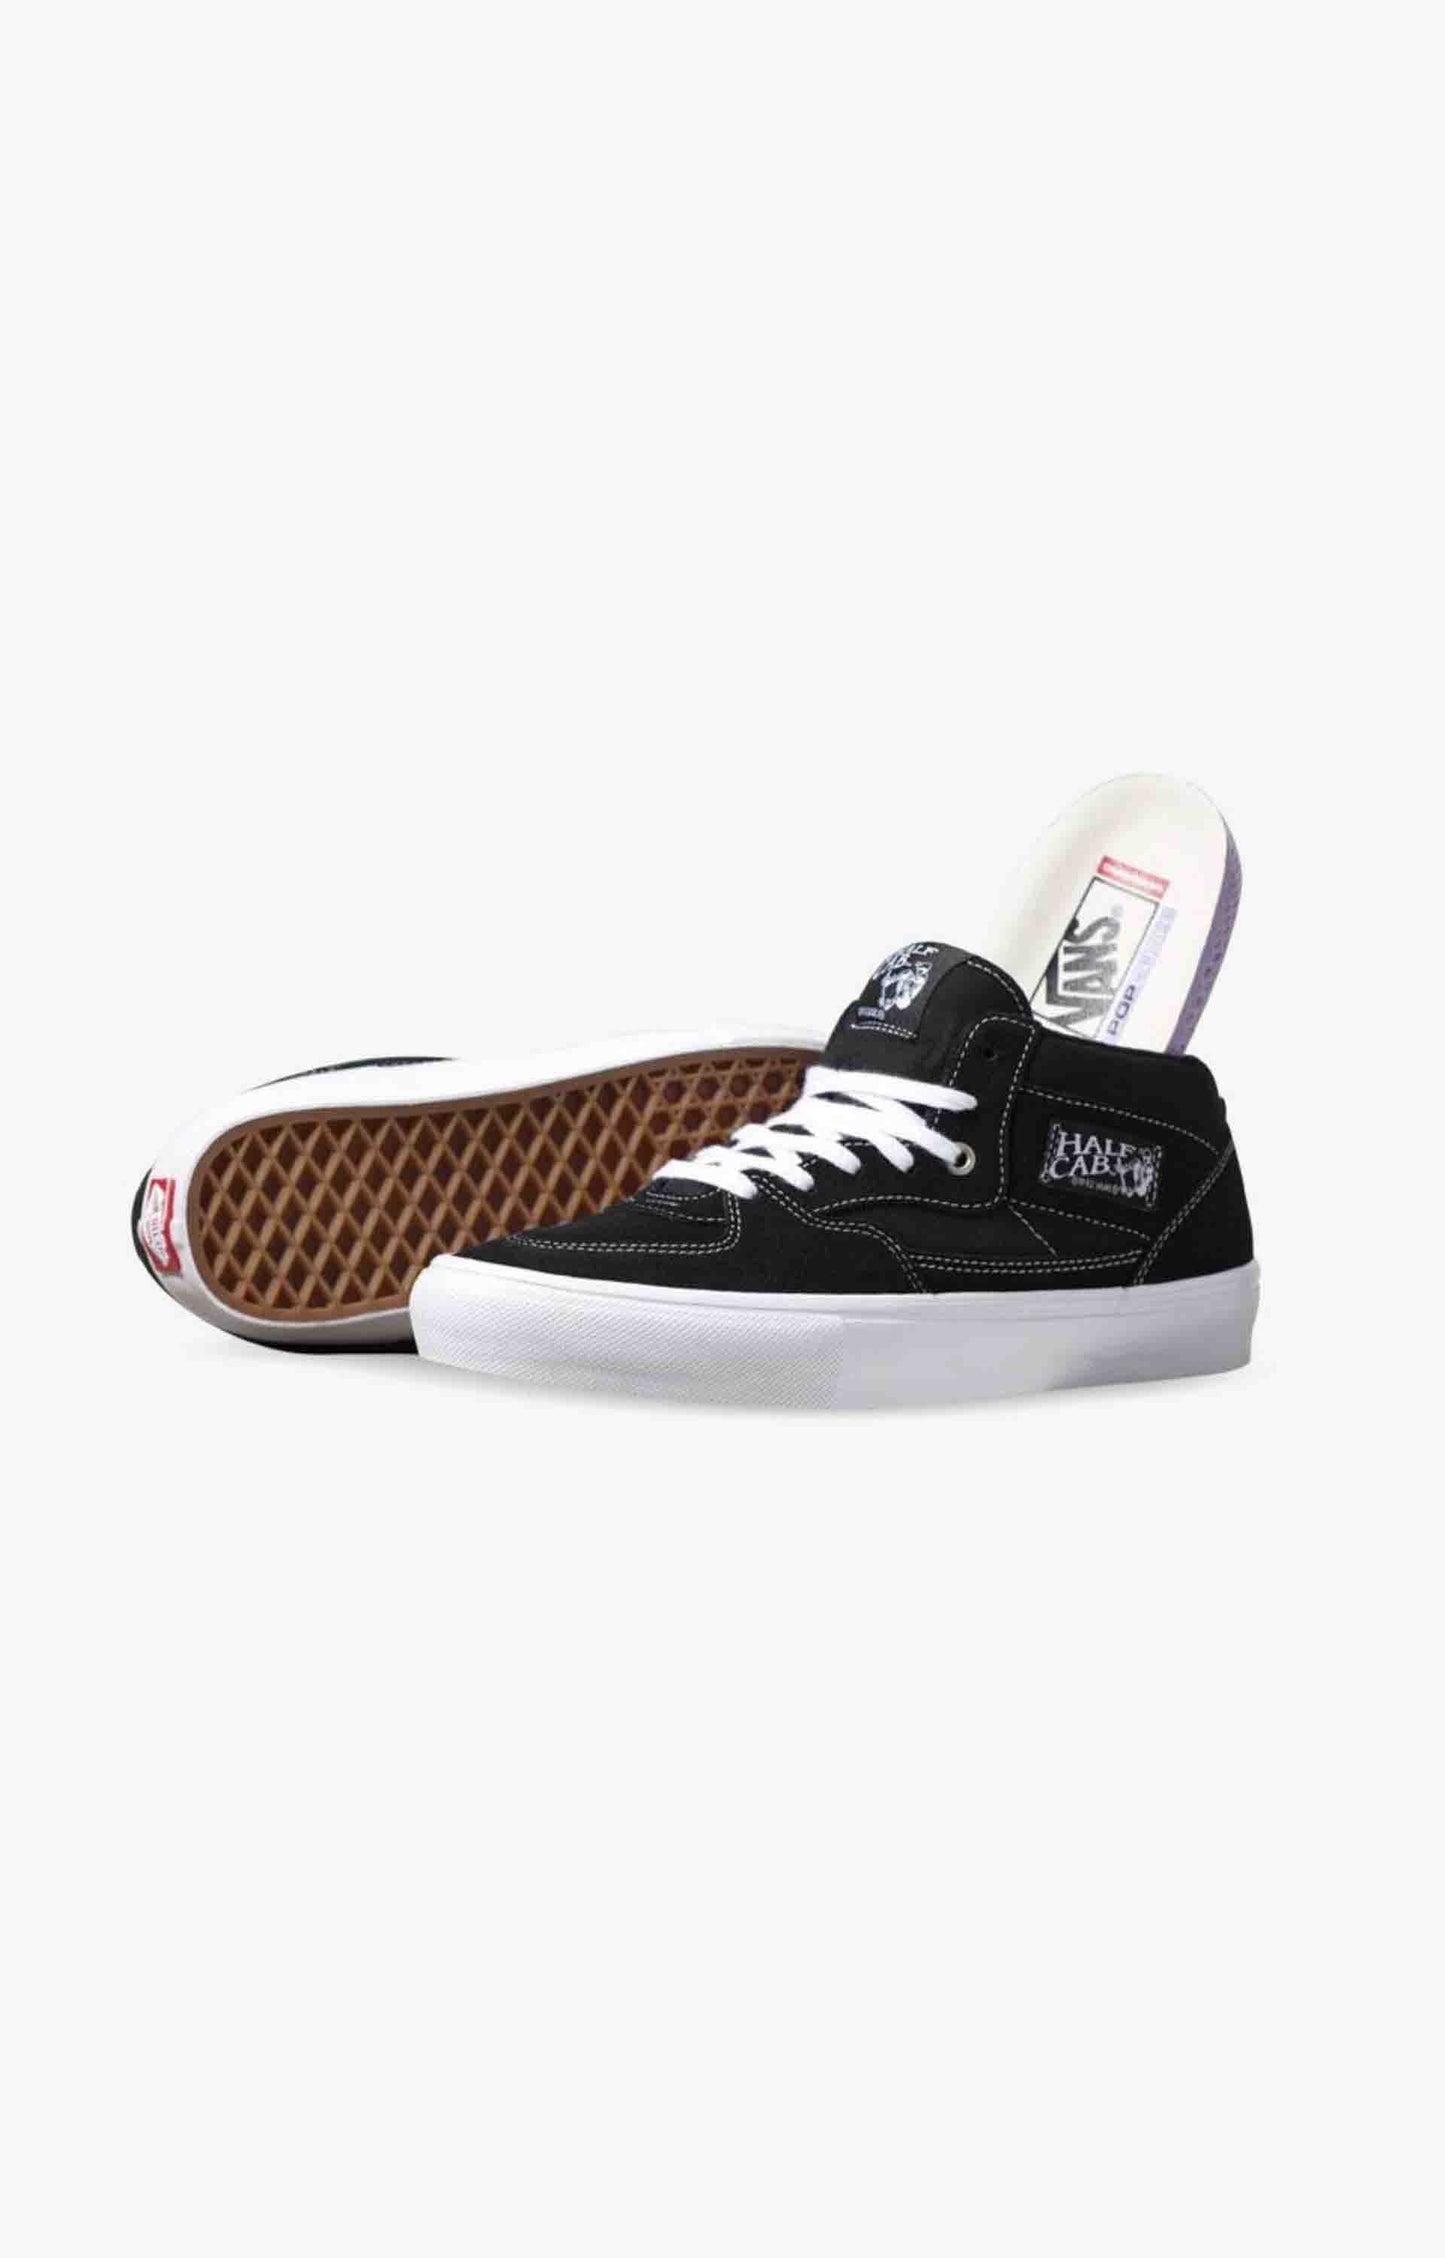 Vans Skate Half Cab Pro Shoes, Black/White